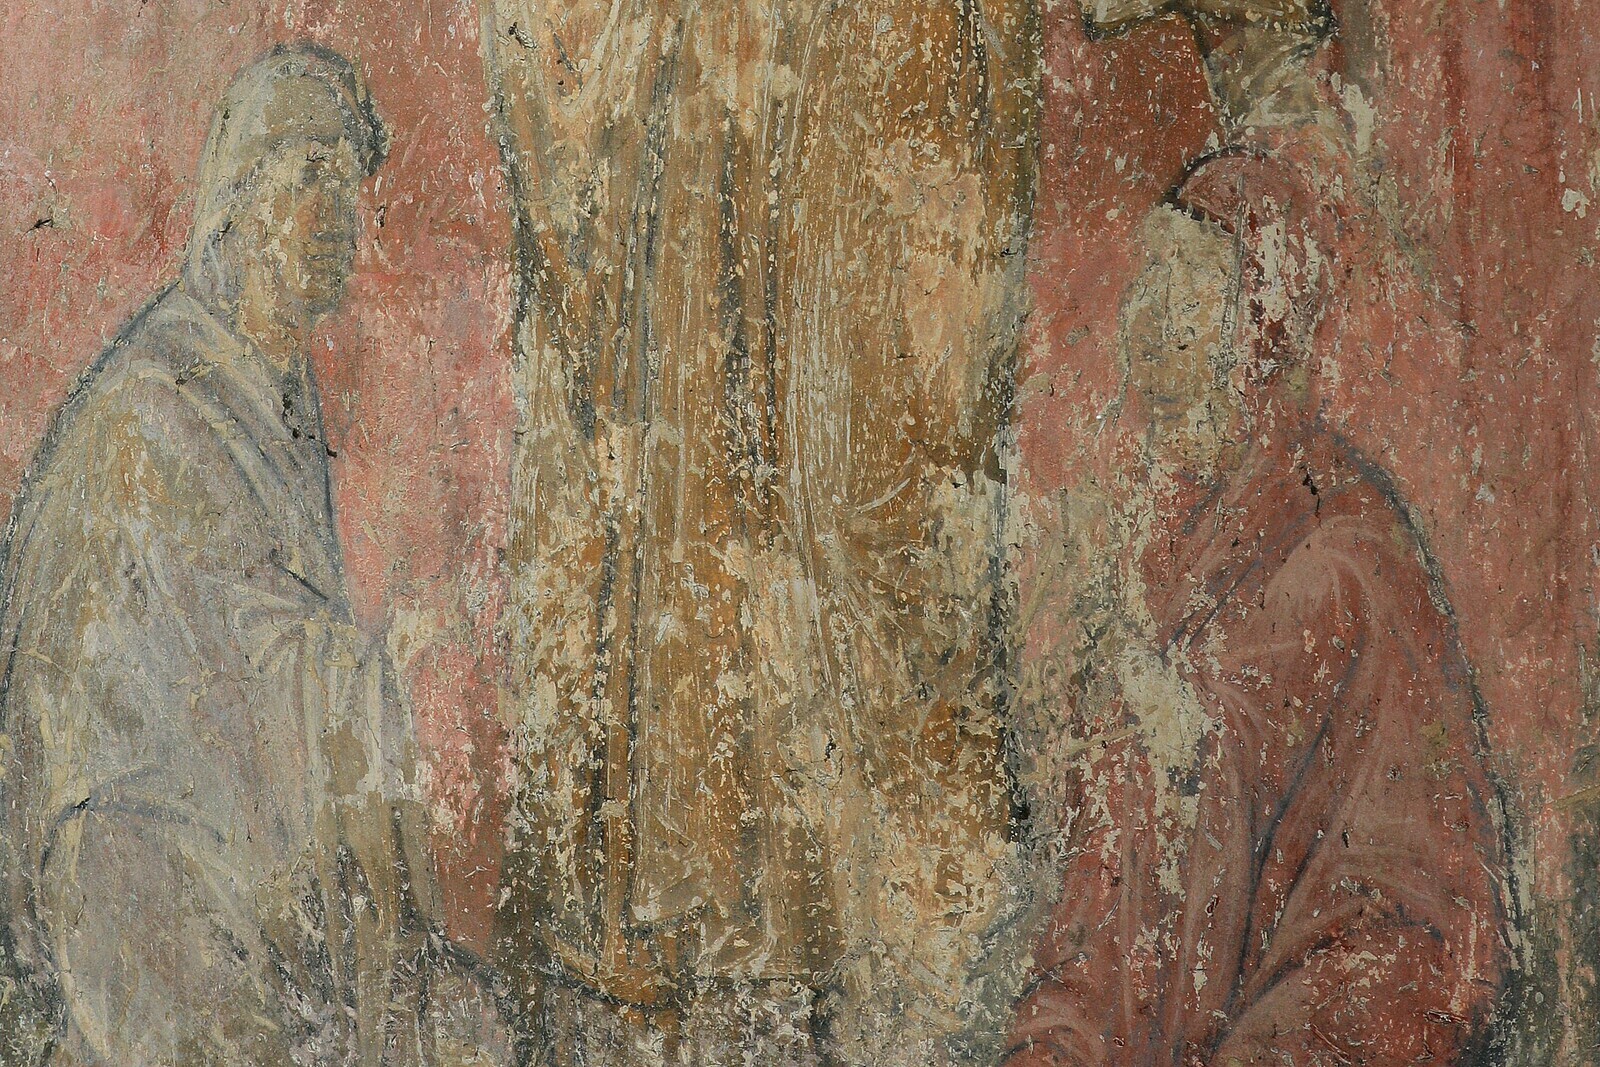 Christ Appearing to the Myrrh-bearers, detail